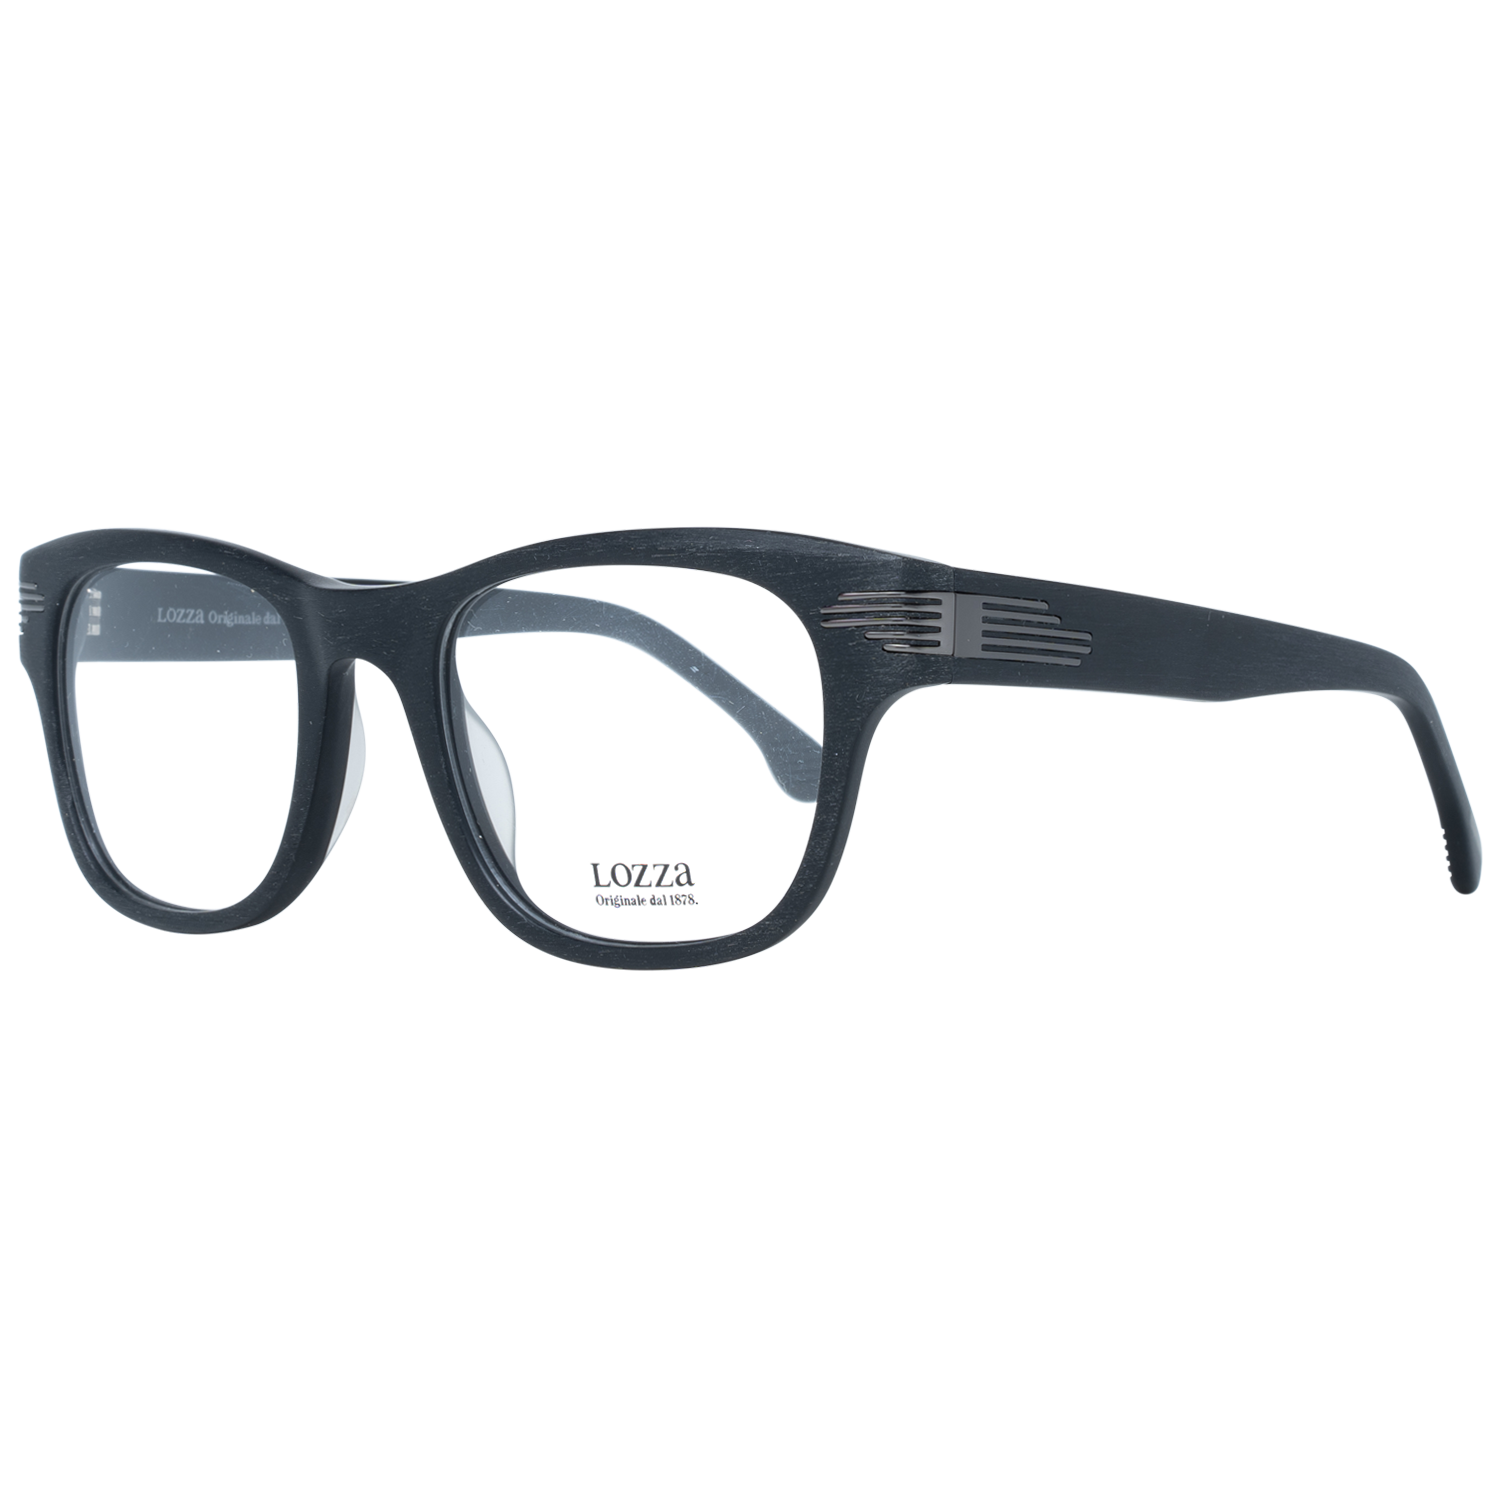 Lozza Frames Lozza Optical Frame VL4105 BLKM 50 Eyeglasses Eyewear UK USA Australia 